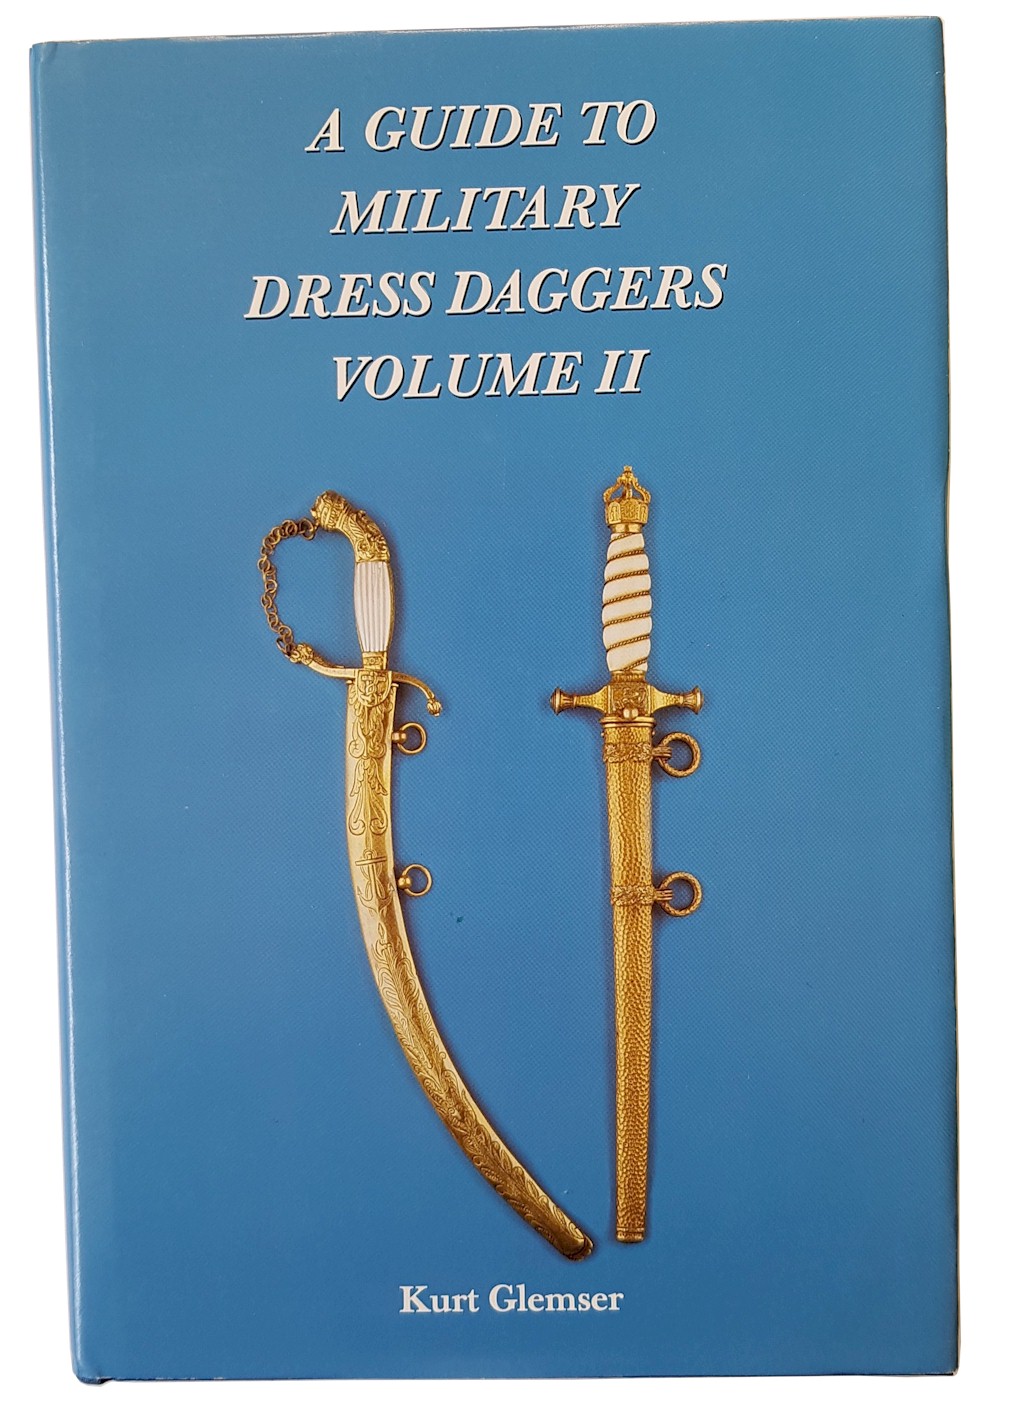 A GUIDE TO MILITARY DRESS DAGGERS: VOLUME II